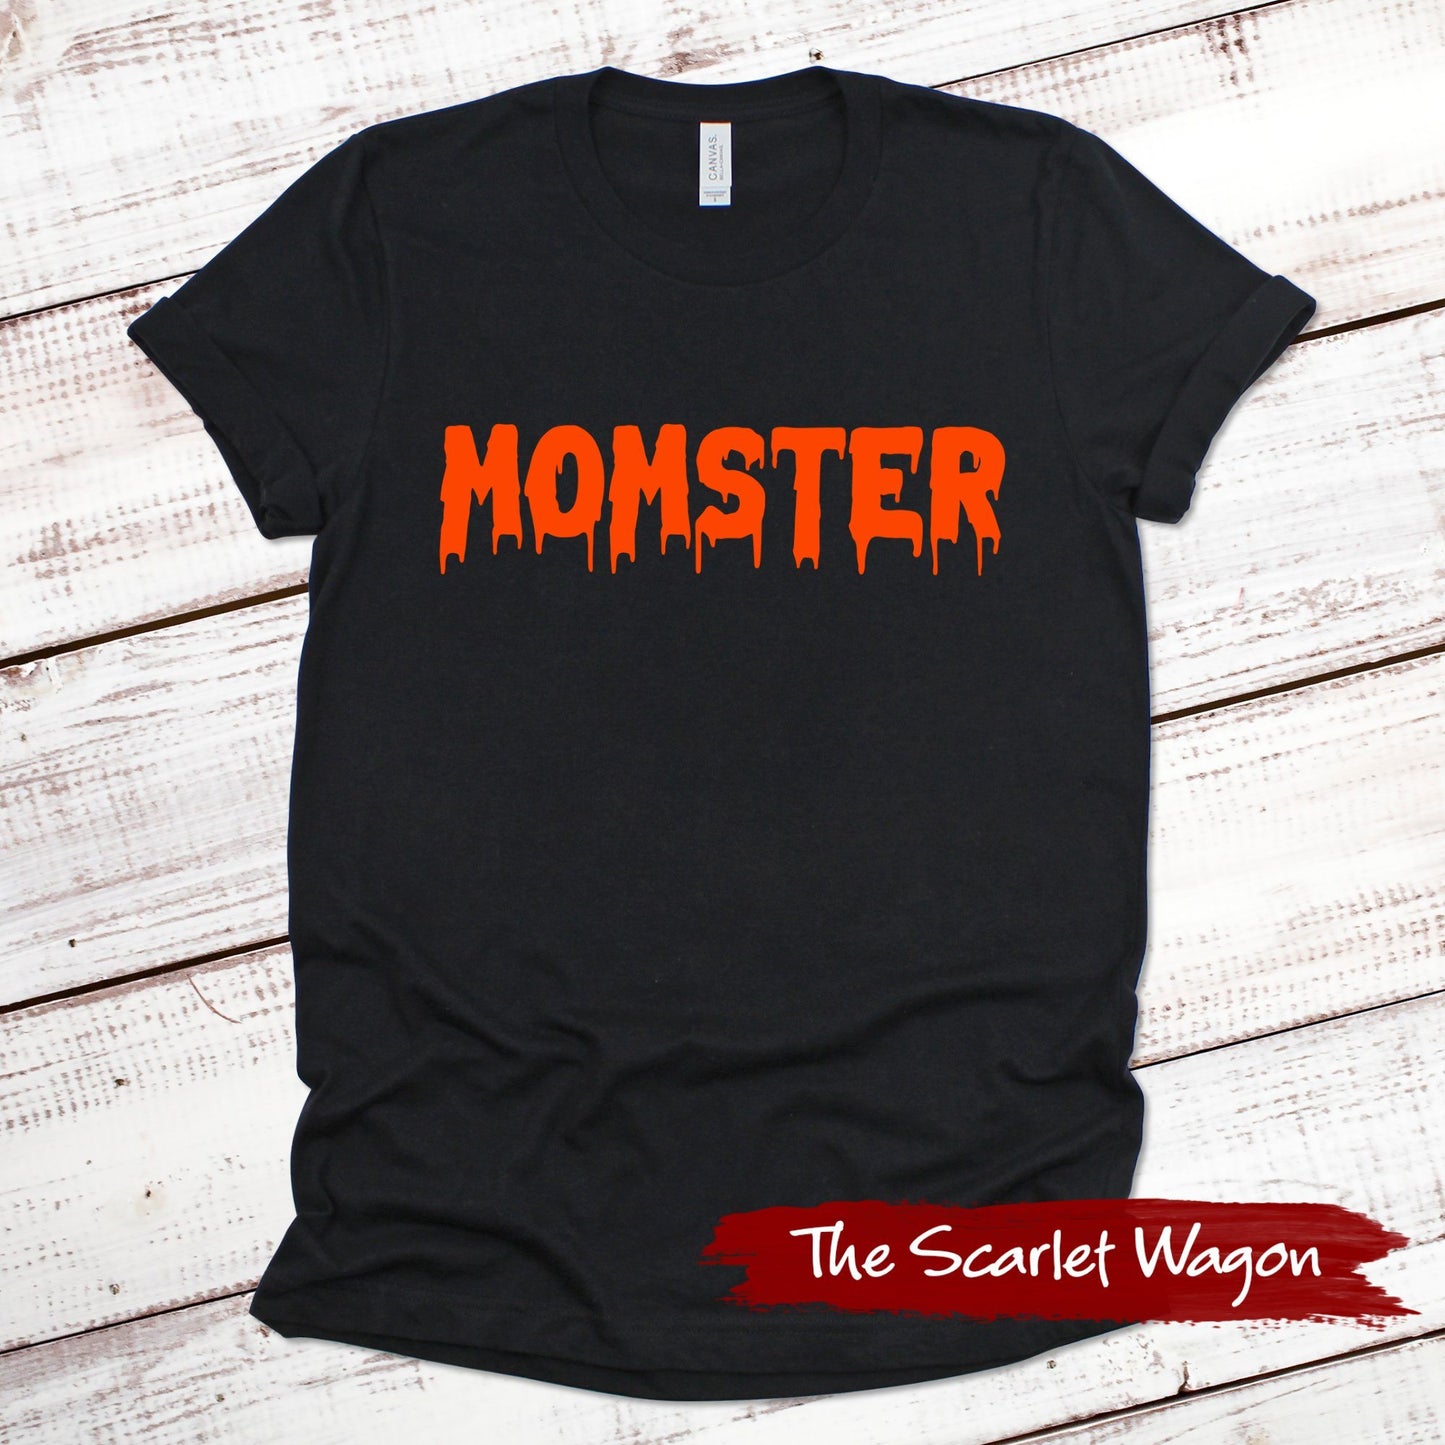 Momster Halloween Shirt Scarlet Wagon Black XS 